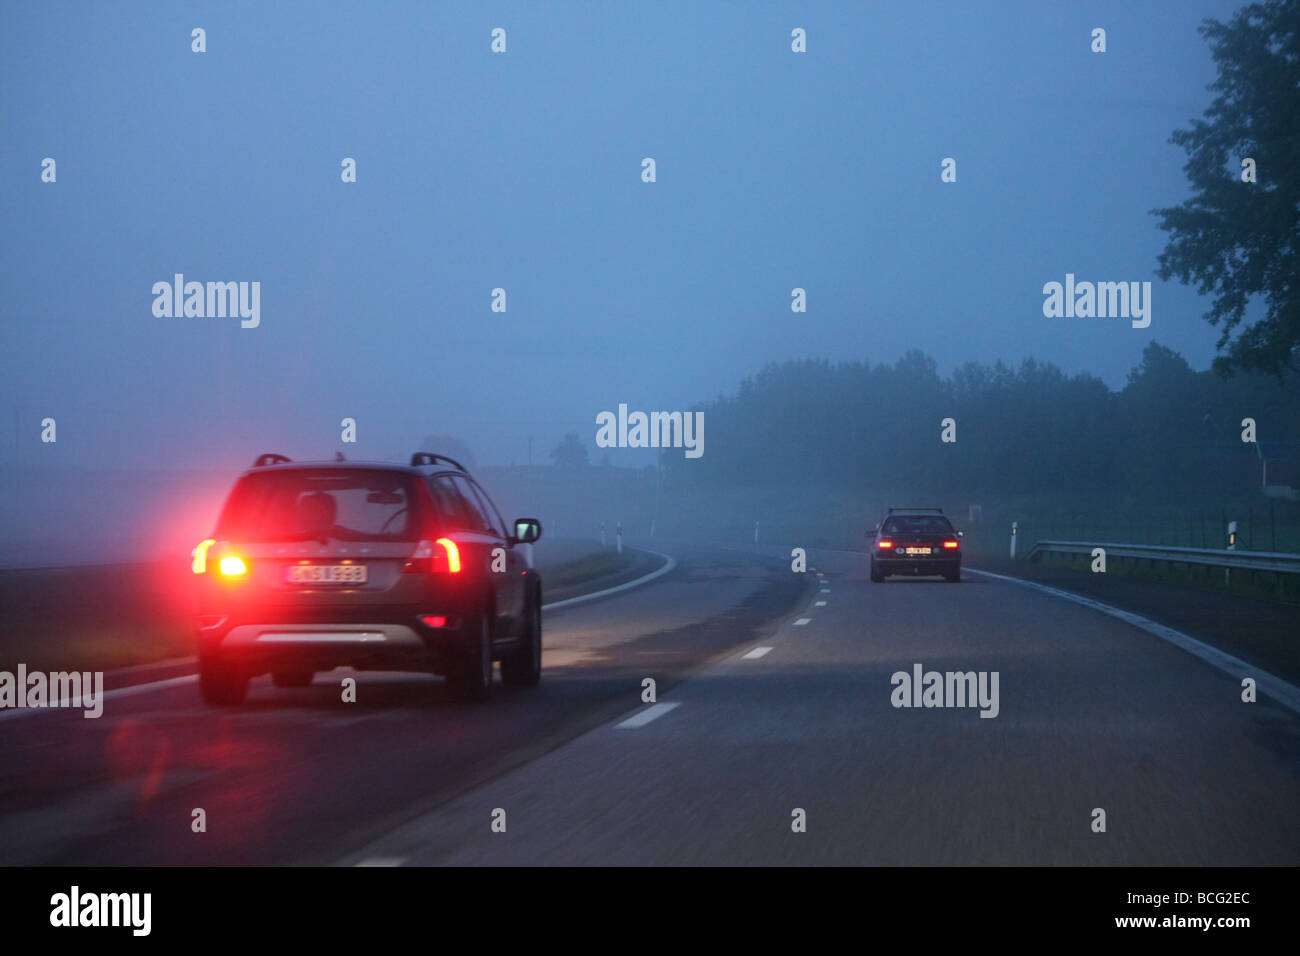 Car on a dark, foggy motorway with the fog warning light lit. Stock Photo